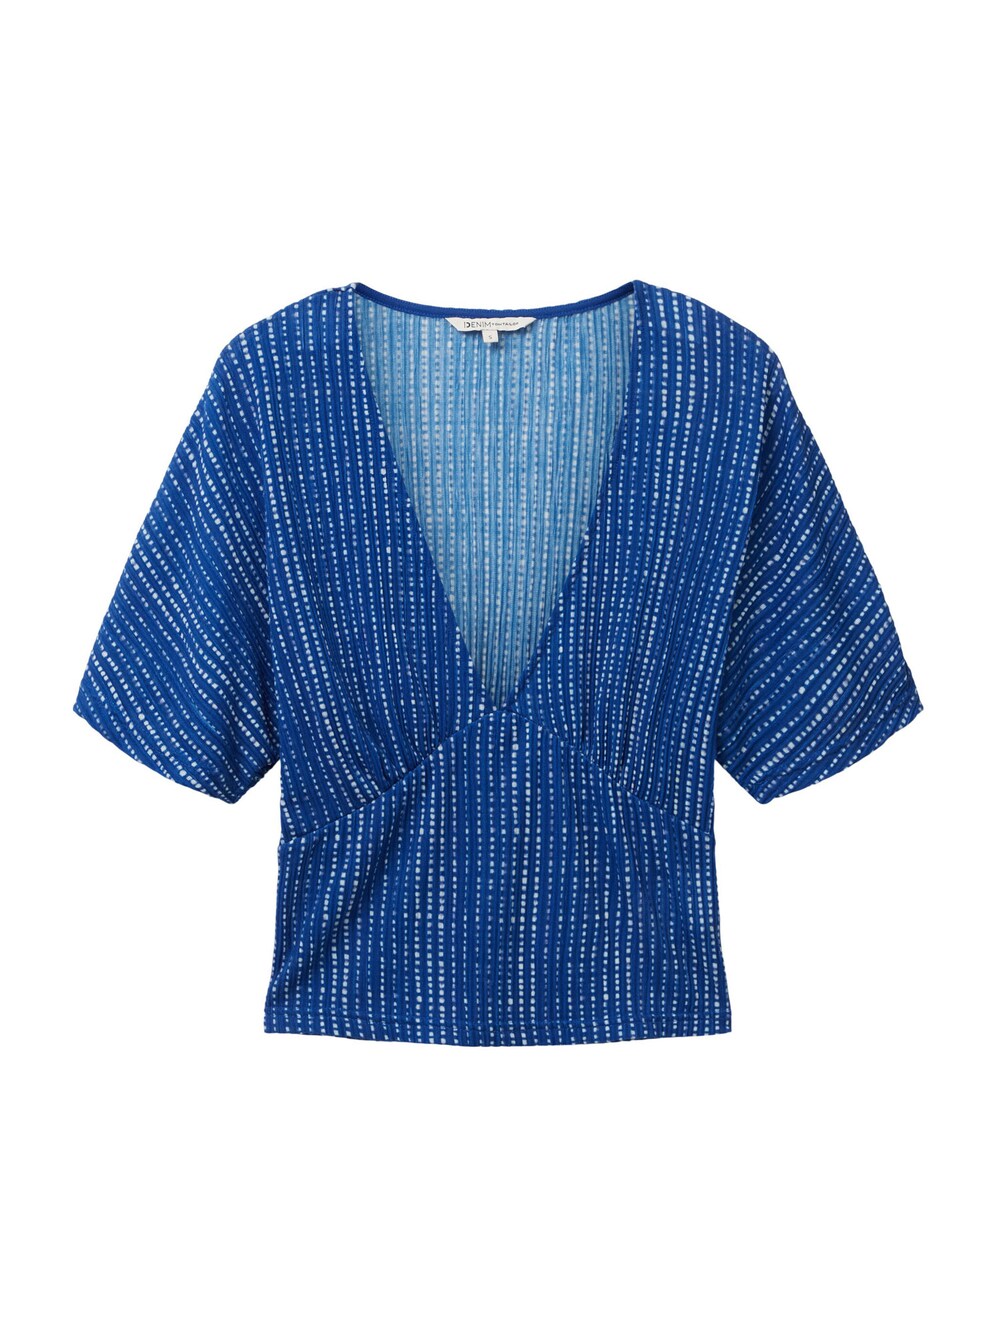 Блузка Tom Tailor, темно-синий футболка tom tailor 1016496 10668 женская цвет тёмно синий размер s